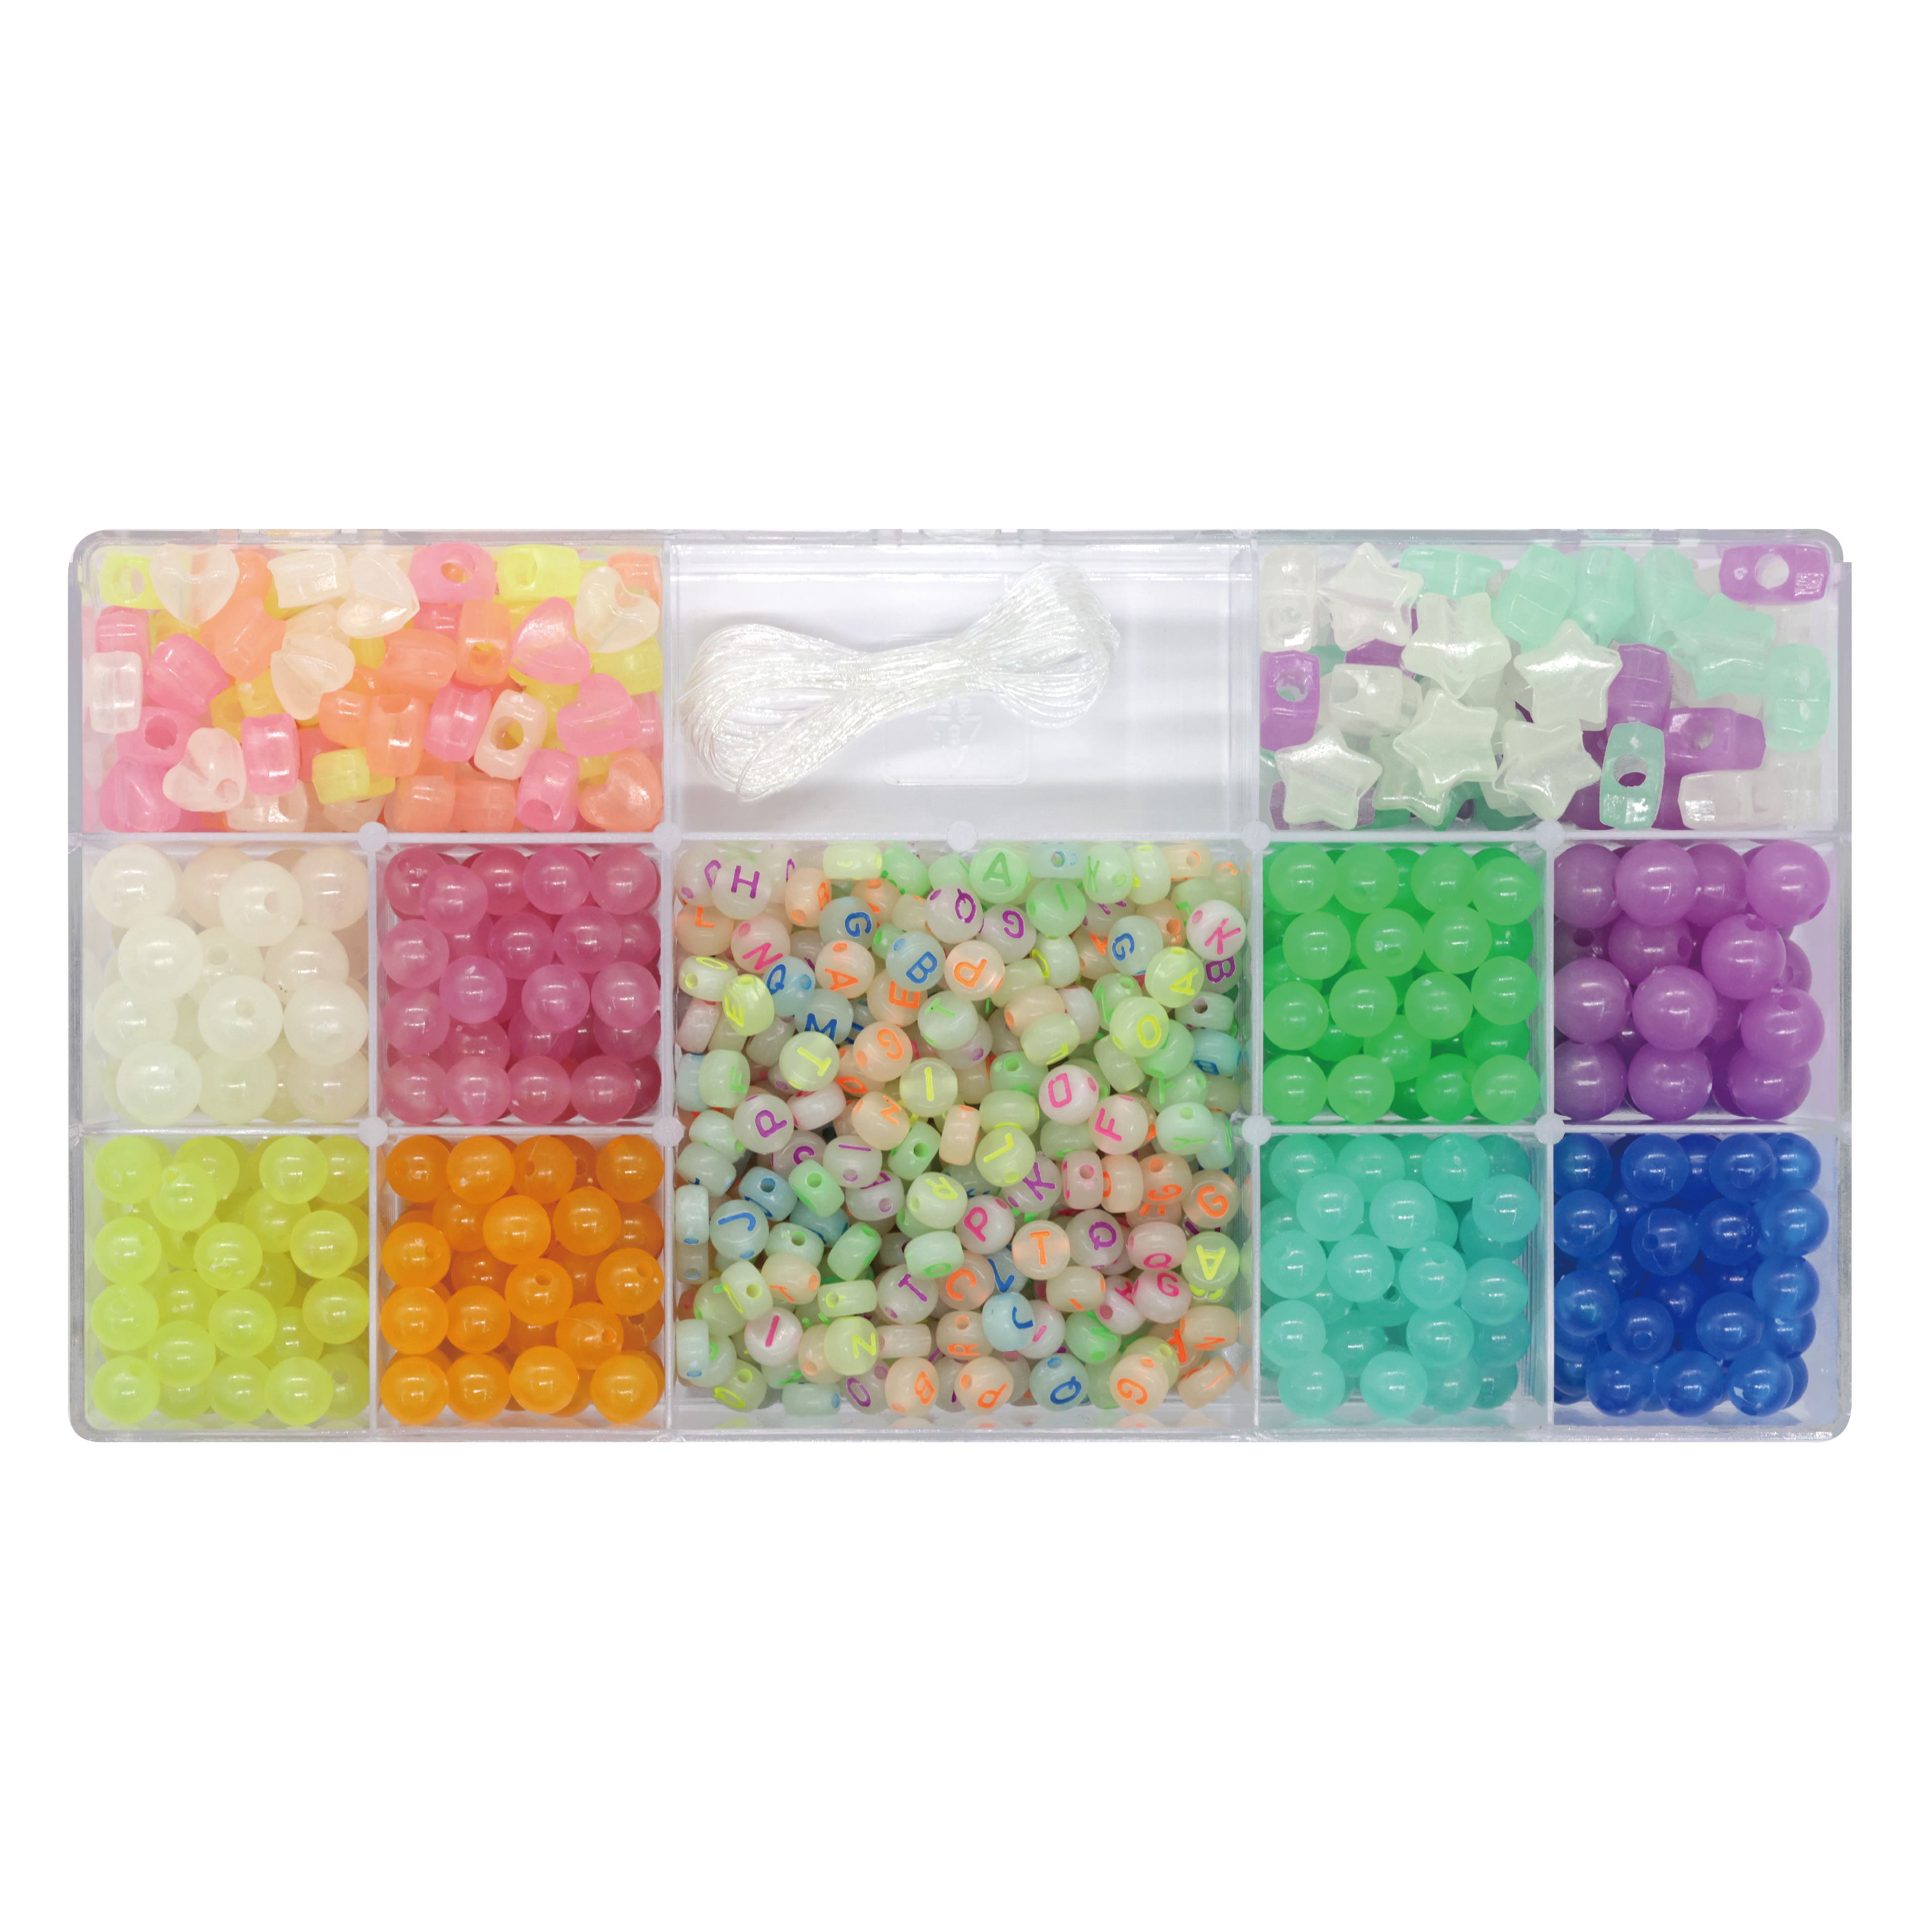 Creatology Pastel Bead Kit Box - One Size - Each